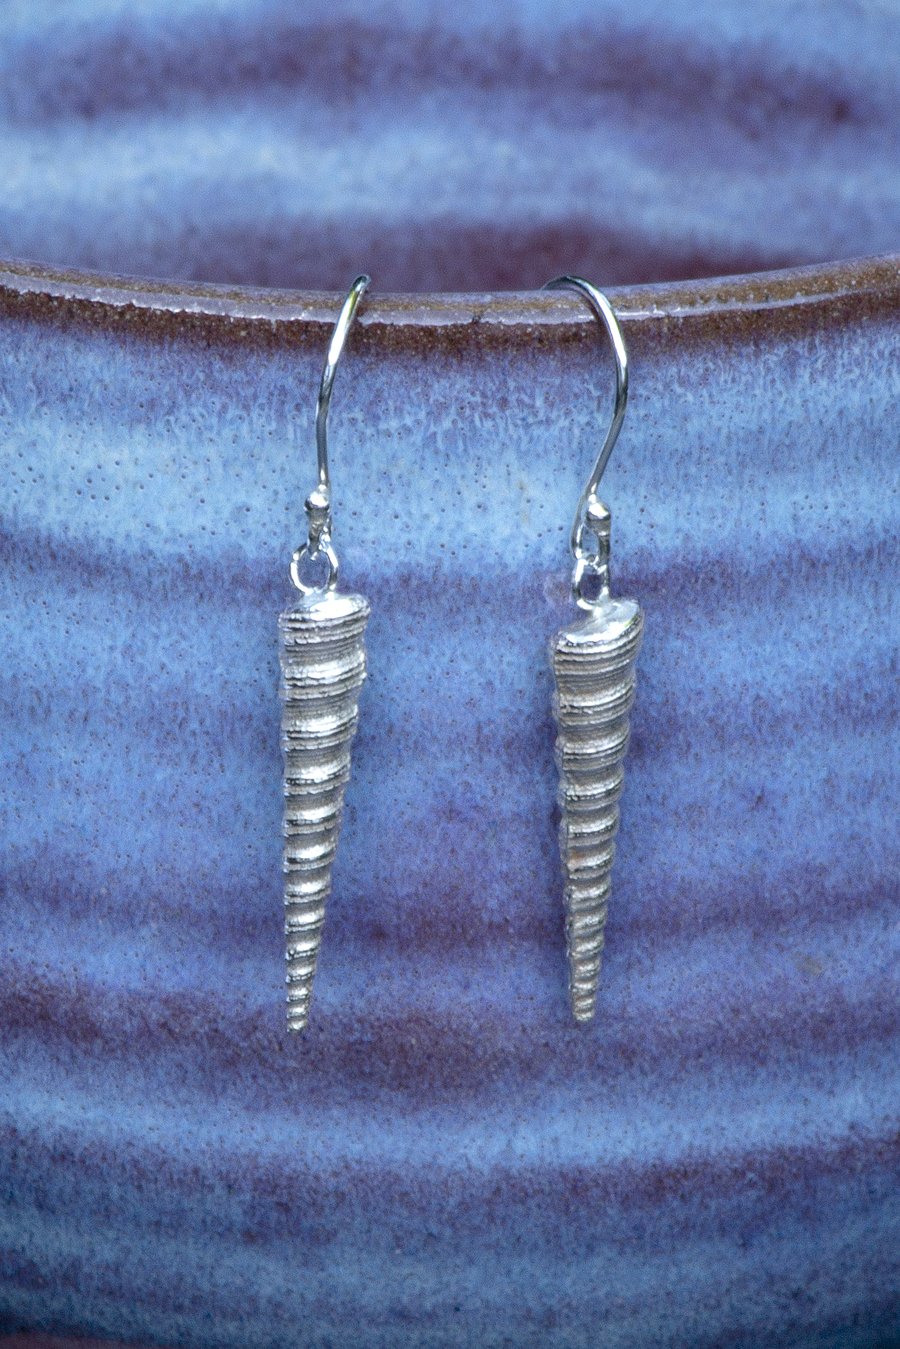 Turritella shell earrings